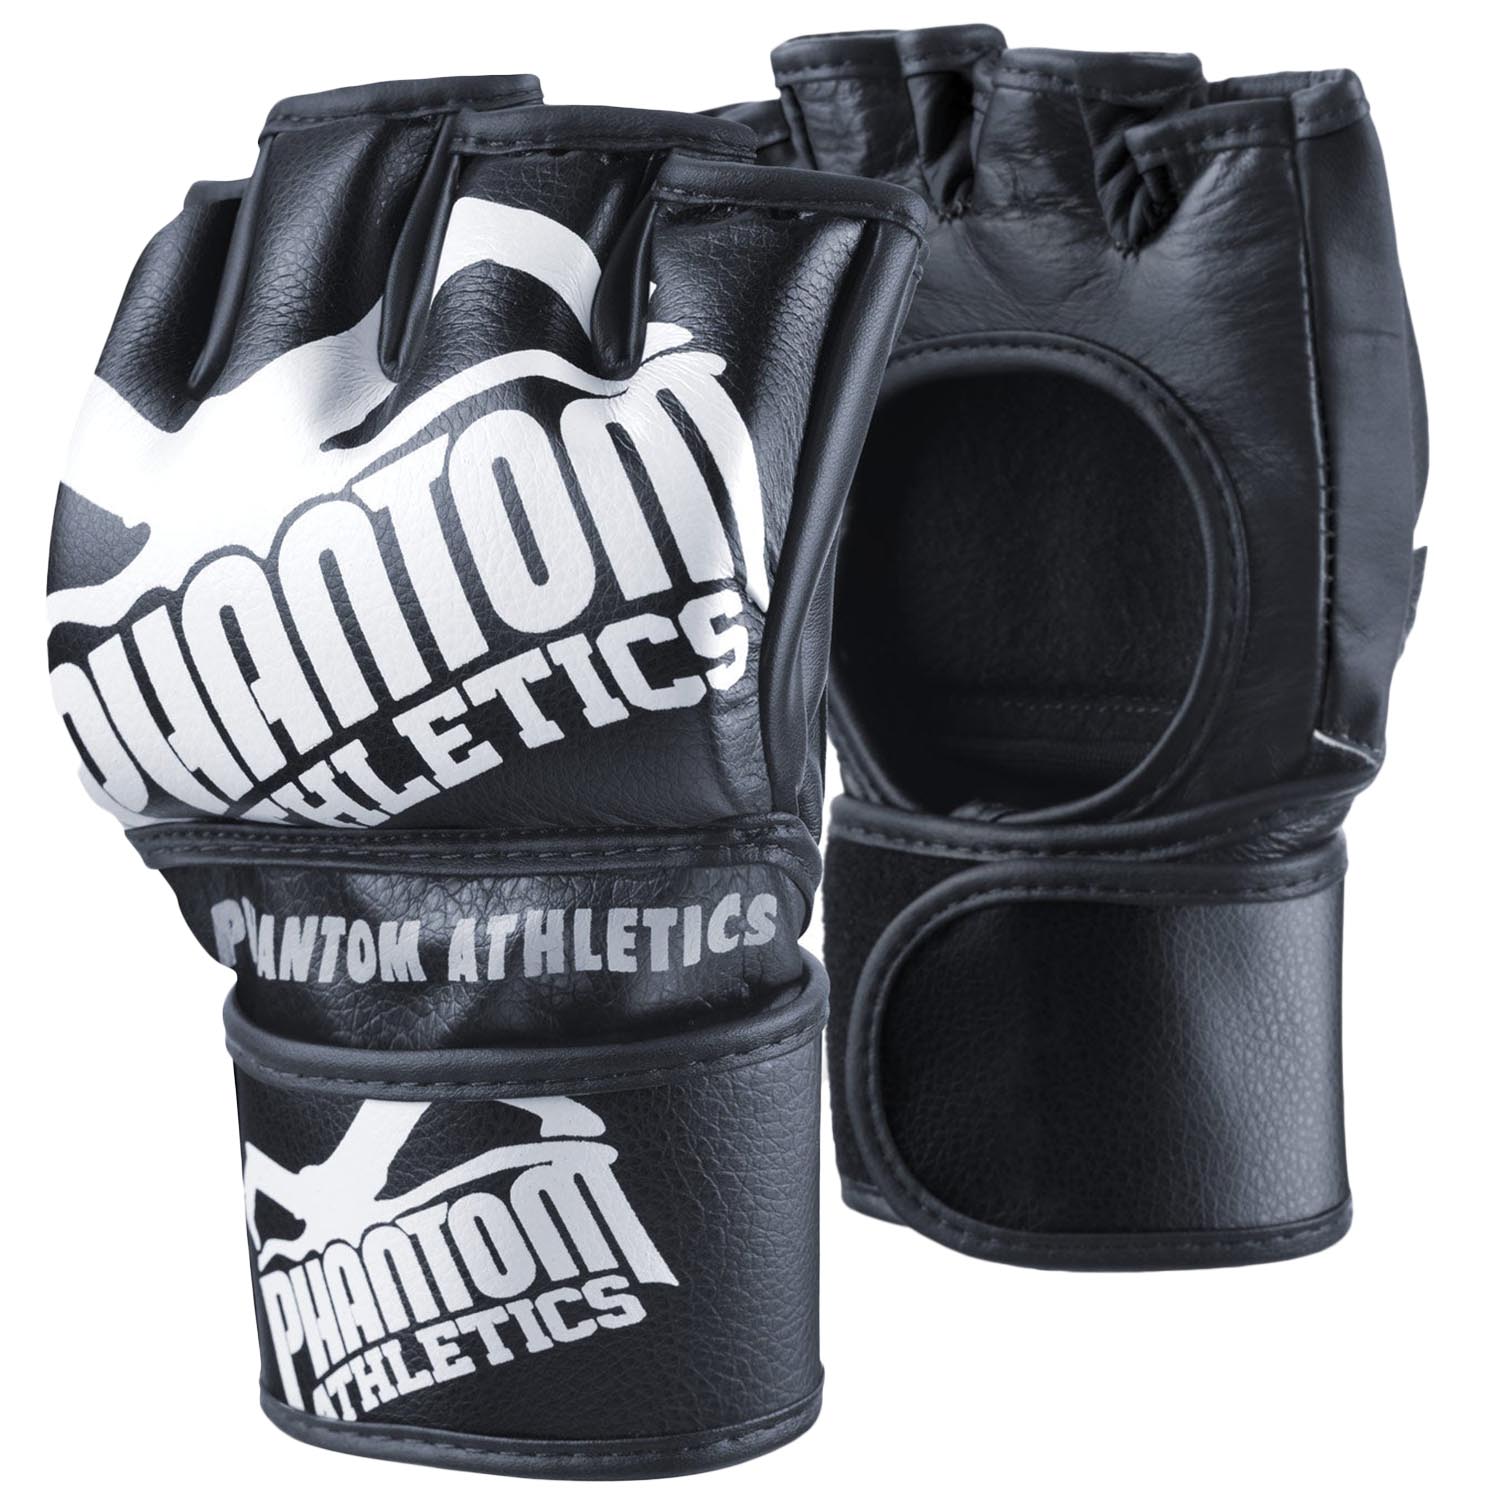 Phantom Athletics MMA Boxhandschuhe, blackout